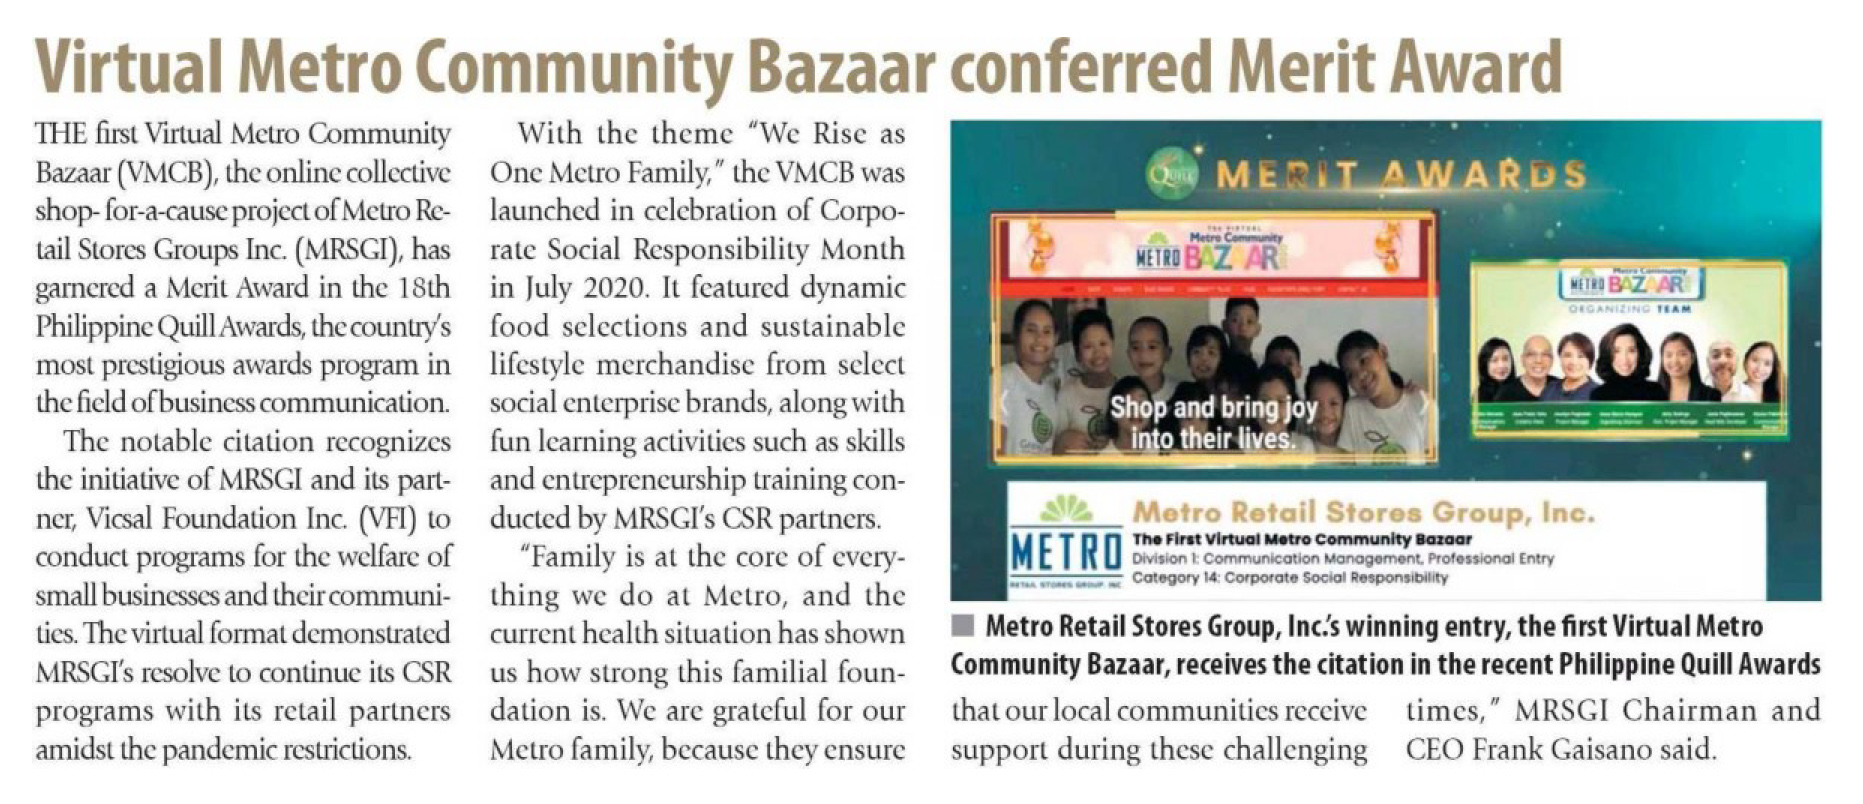 April 9 2021 Virtual Metro Community Bazaar conferred Merit Award Manila Times